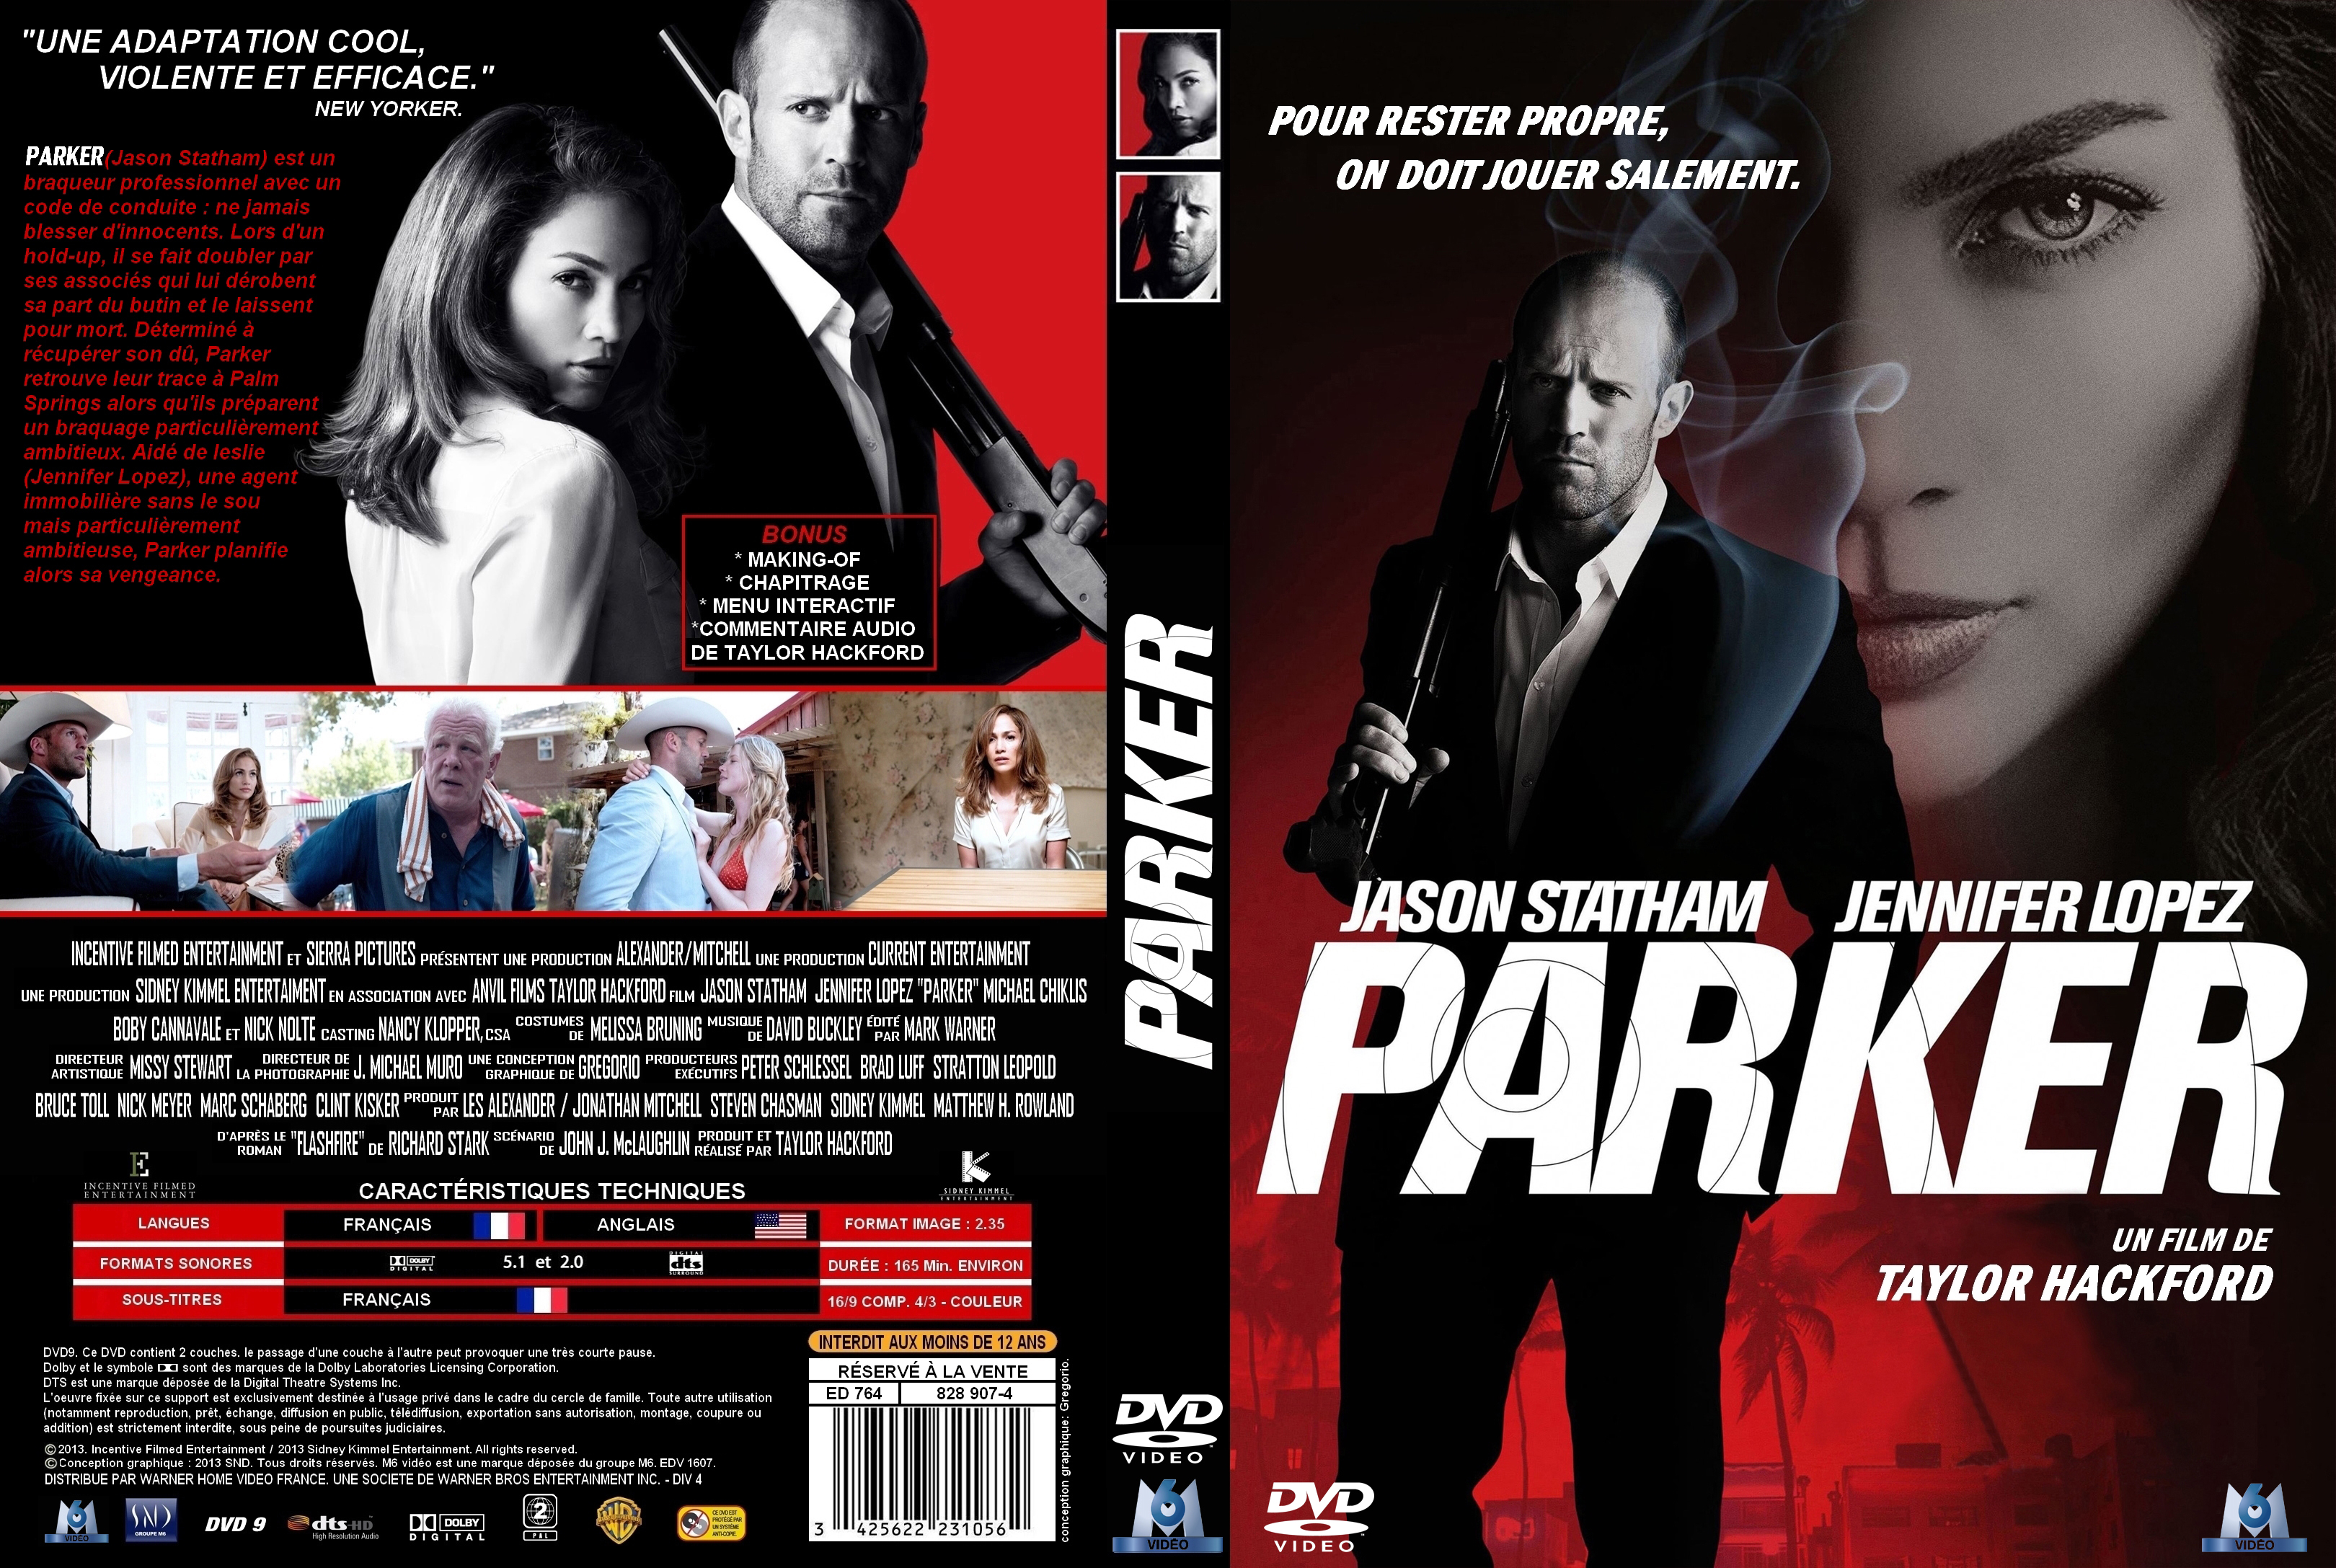 Jaquette DVD Parker custom